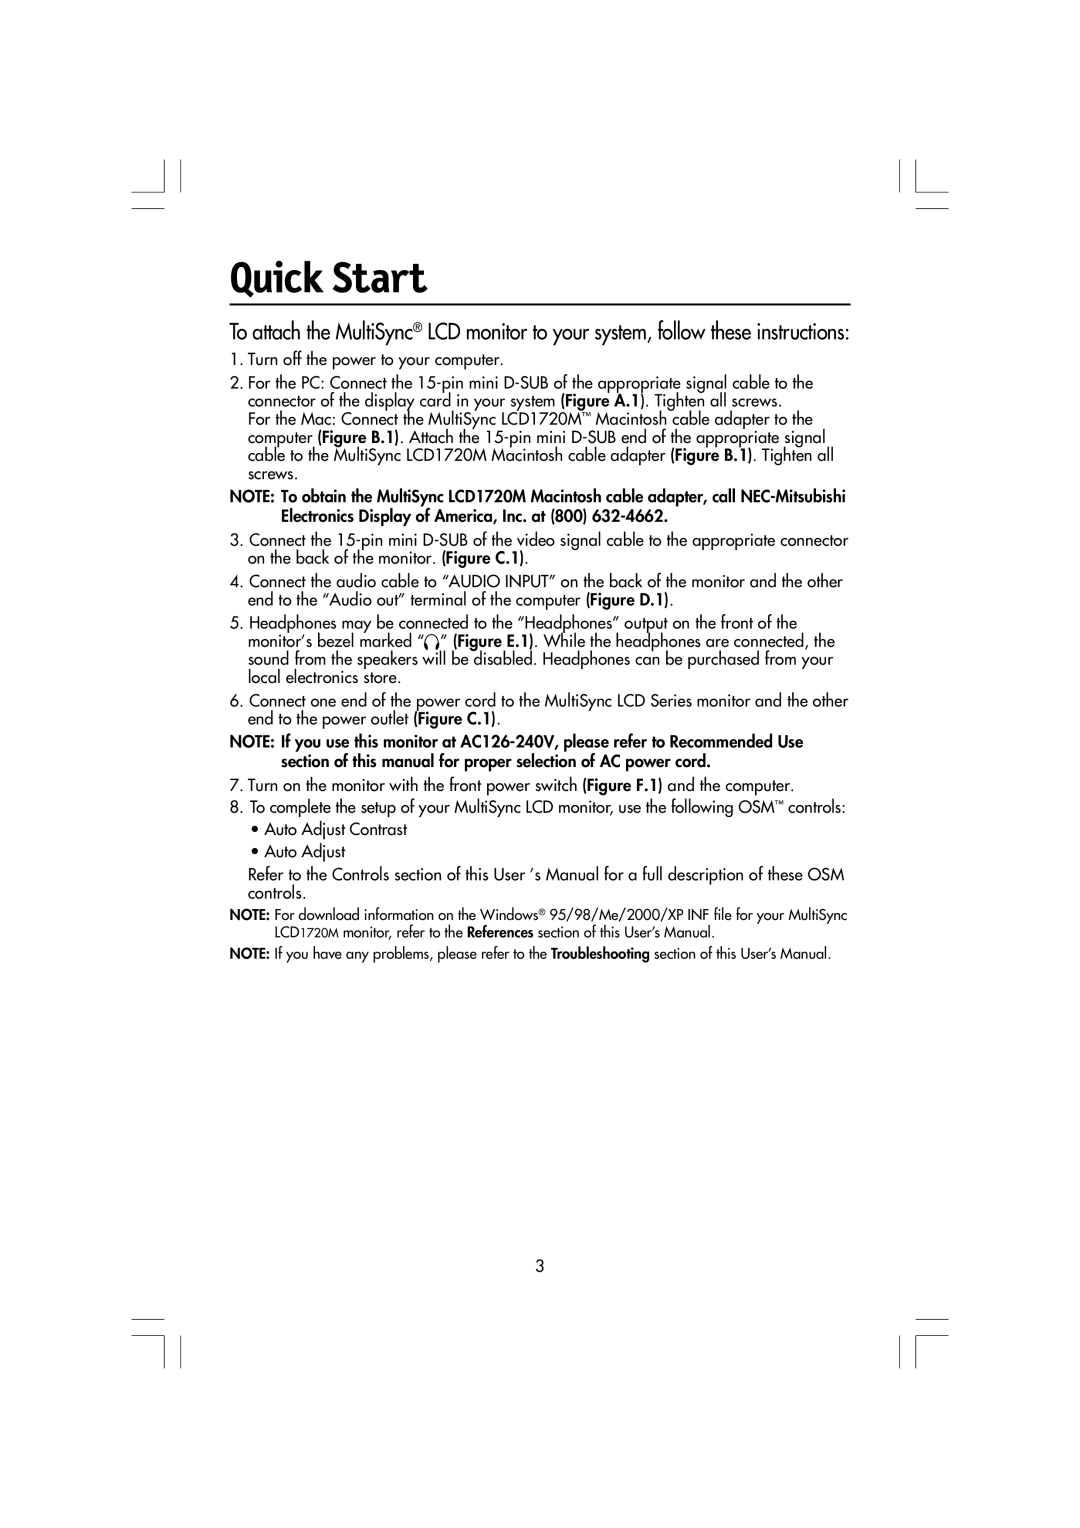 Mitsubishi Electronics LCD1720M manual Quick Start 